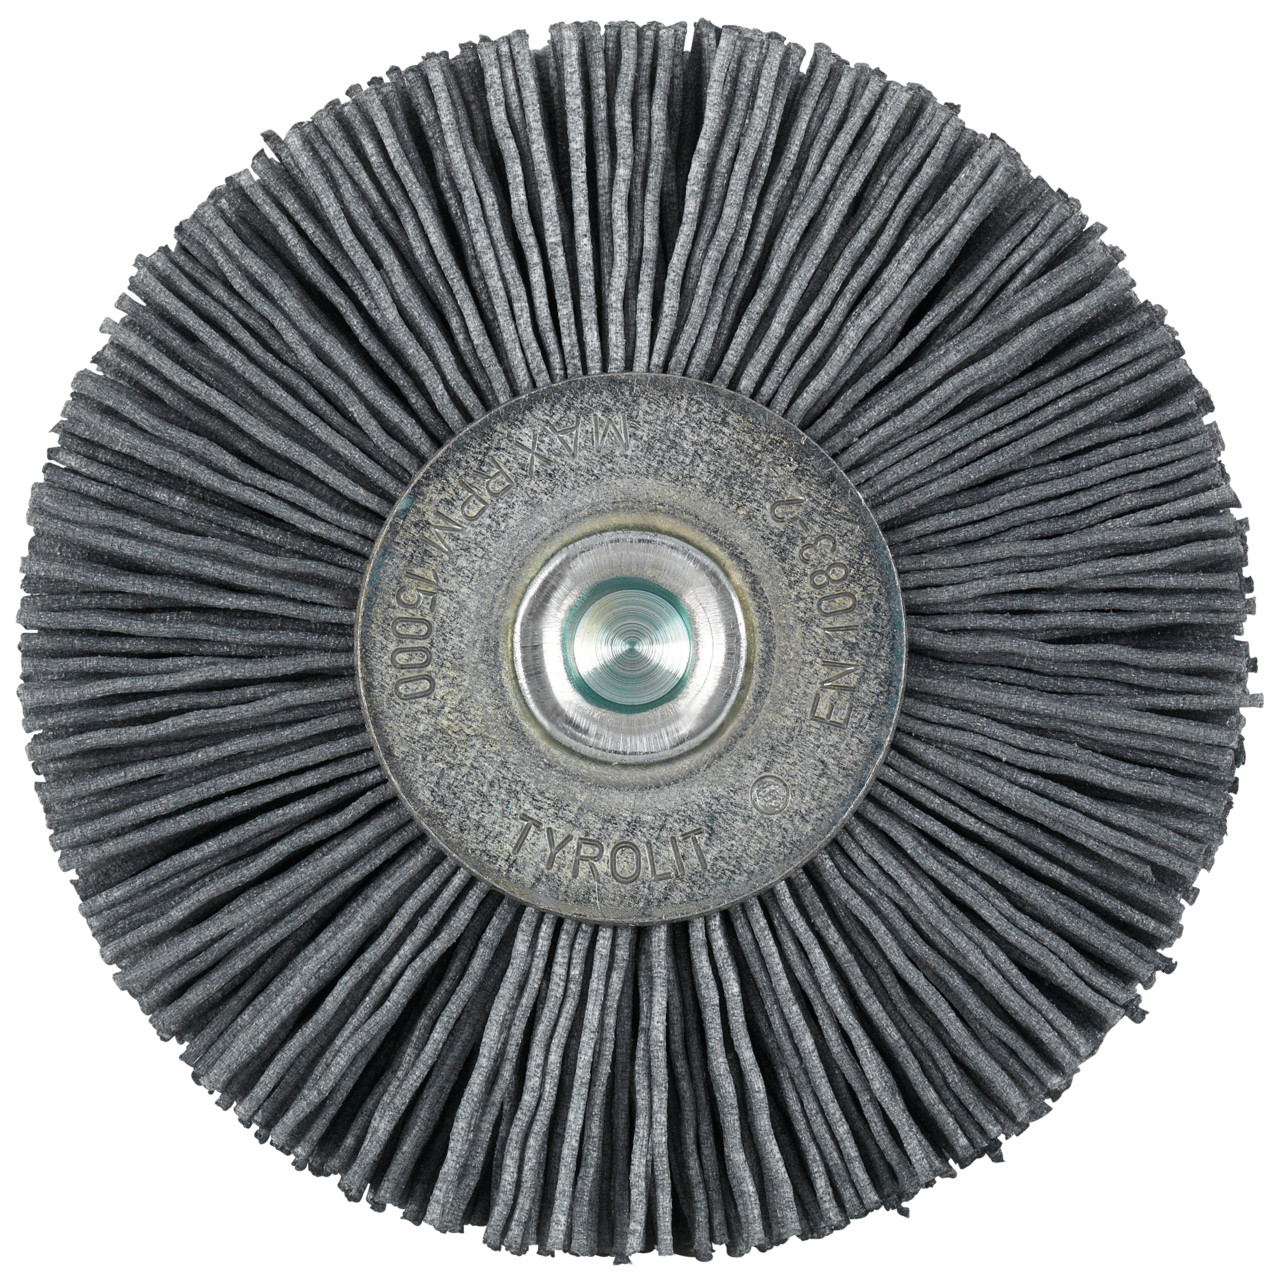 Tyrolit Round shank brushes DxLxH-GExI 70x20x19-6x30 For universal use, shape: 52RDK - (round shank brushes), Art. 908264